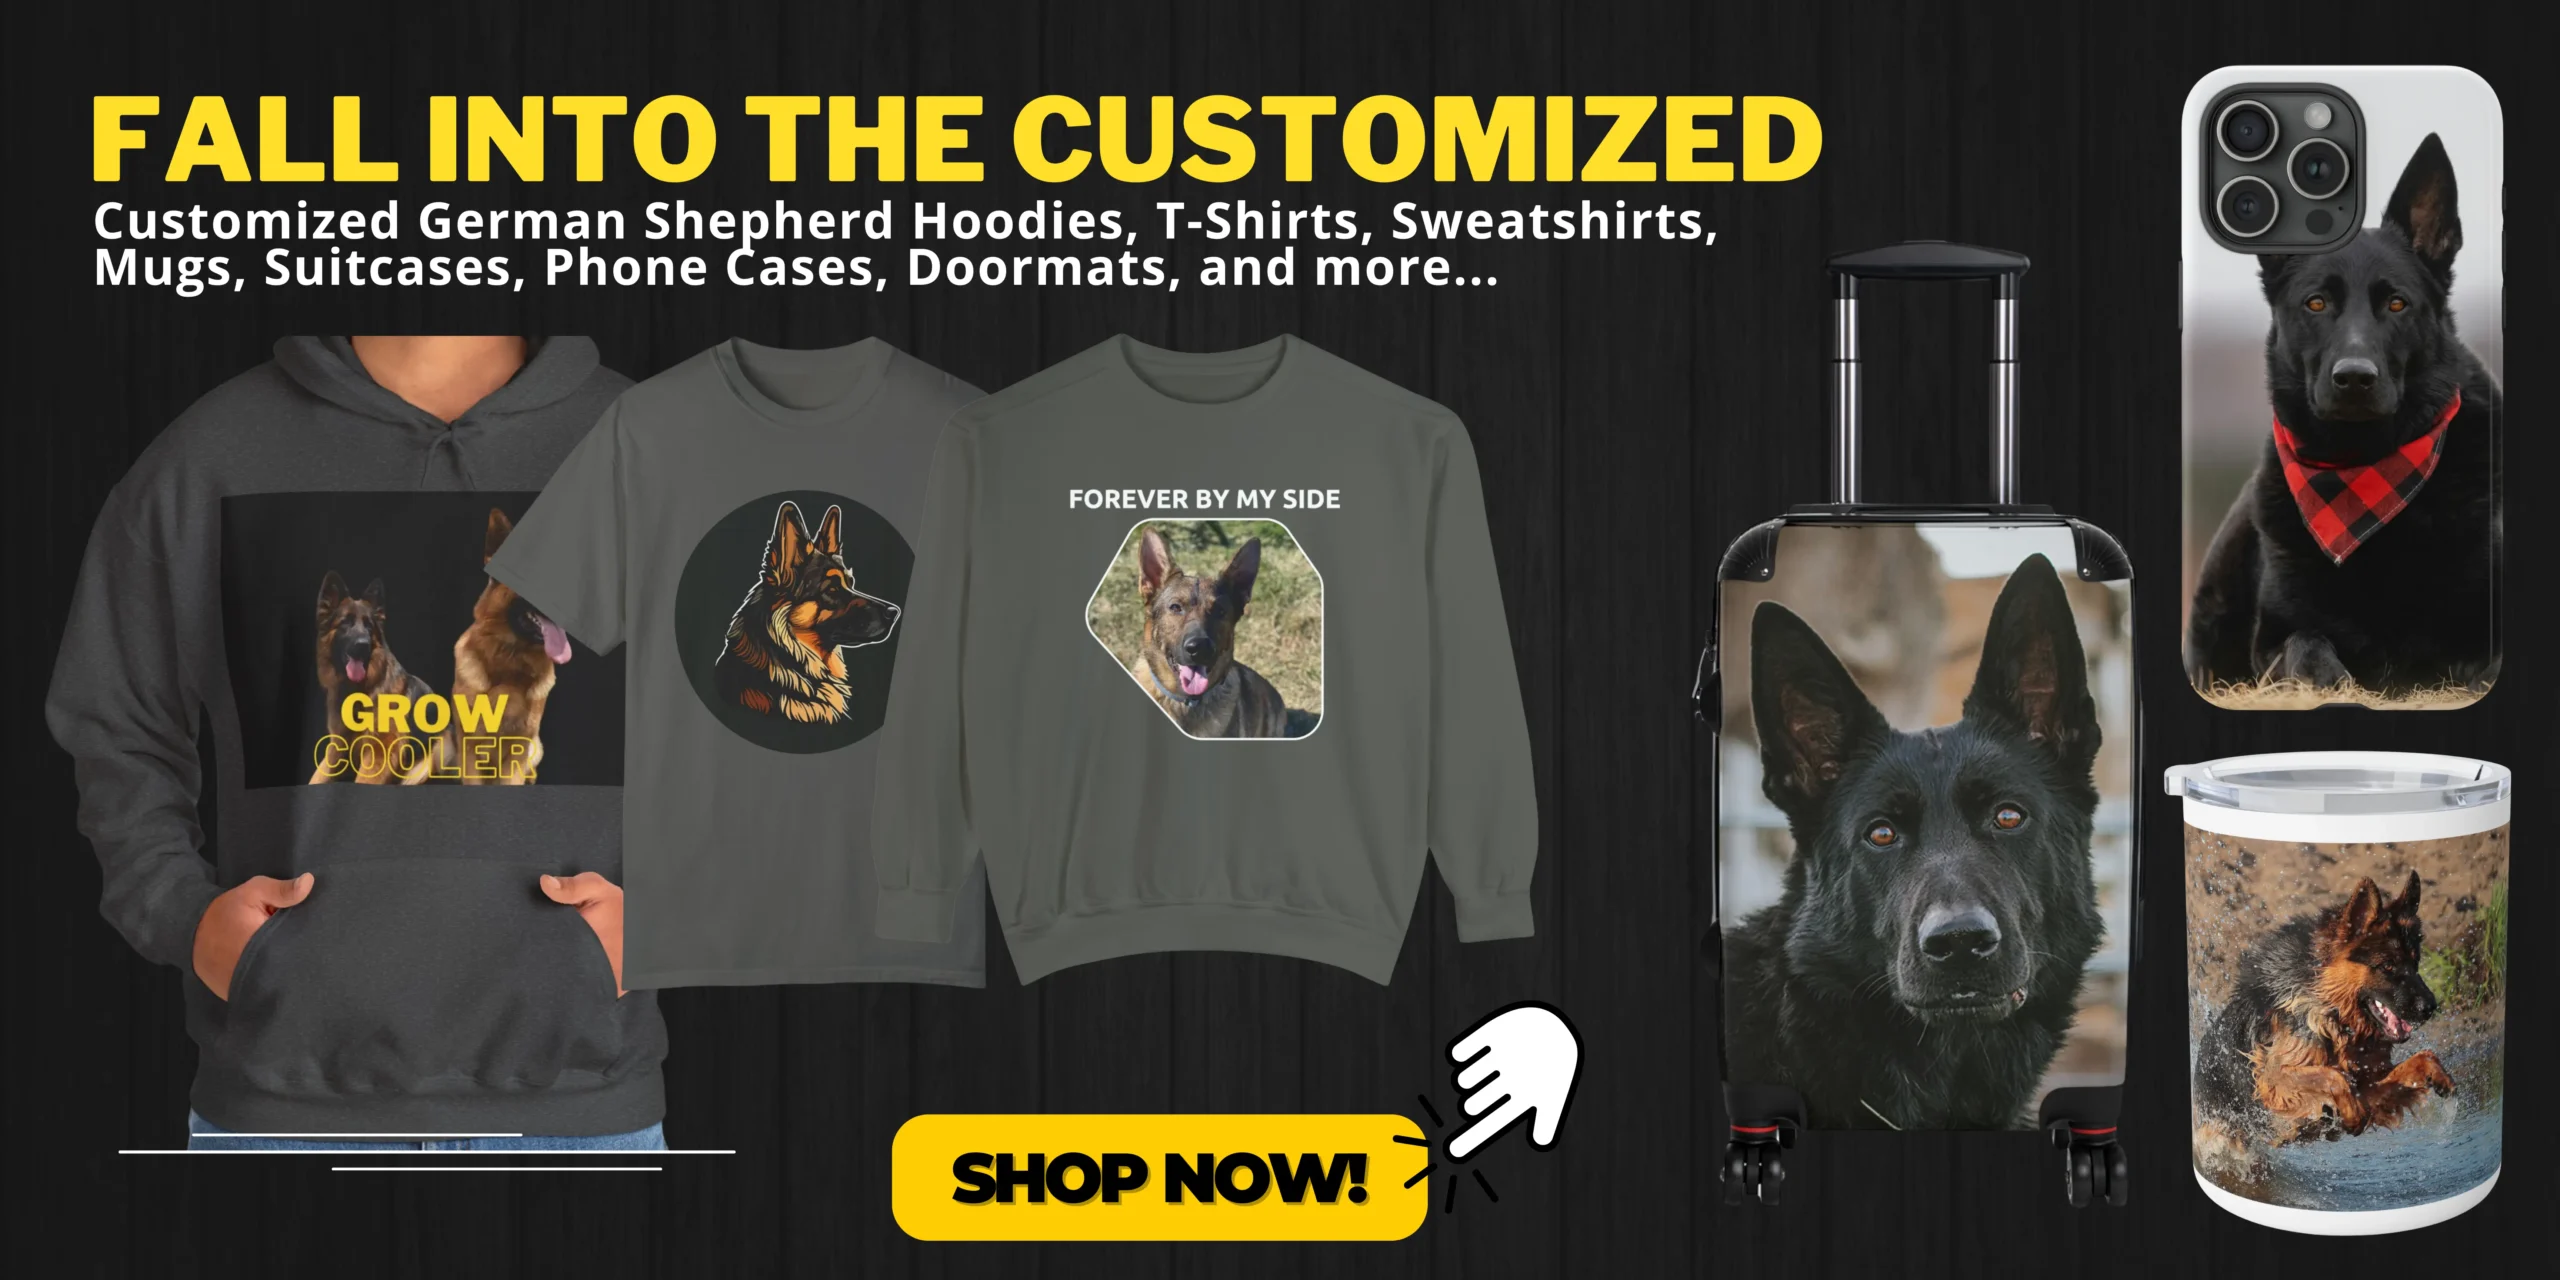 Order Customized German Shepherd Hoodies, T-Shirts, Sweatshirts, Mugs, Suitcases, Phone Cases, Doormats, and more...